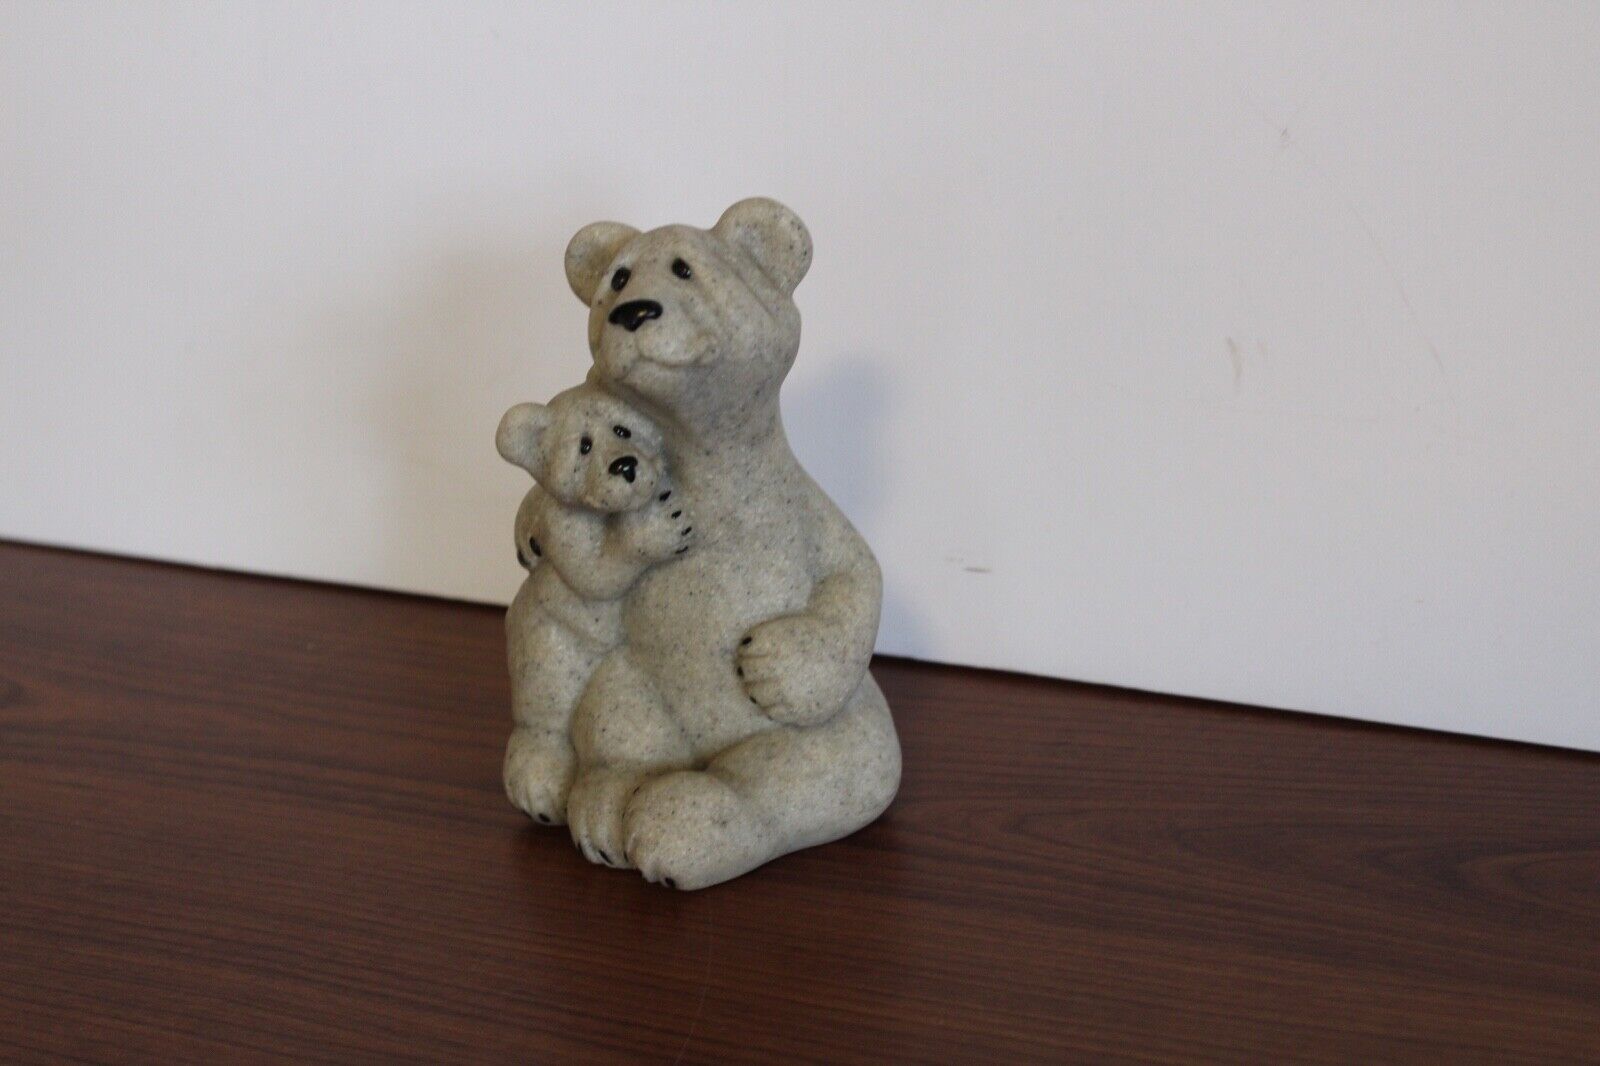 Quarry Critters - Banjo & Bandit Bear Figurine - 2002 - Excellent Condition